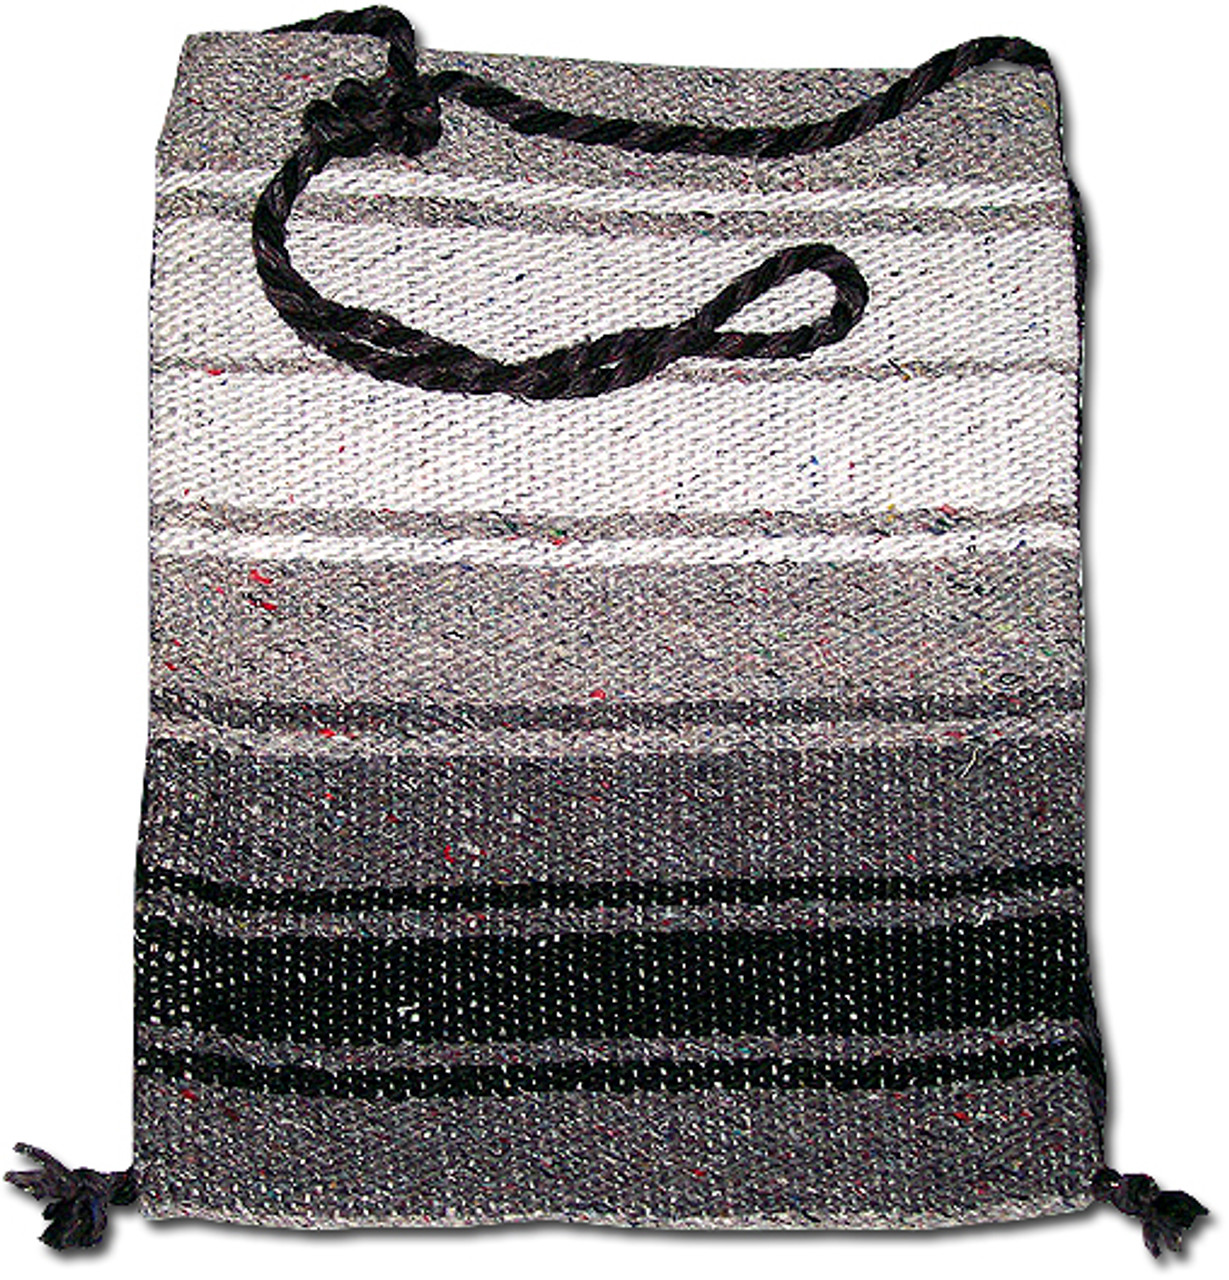 Traditional Handmade/woven Mexican Palm Straw handbags, Purses, tote bags |  eBay